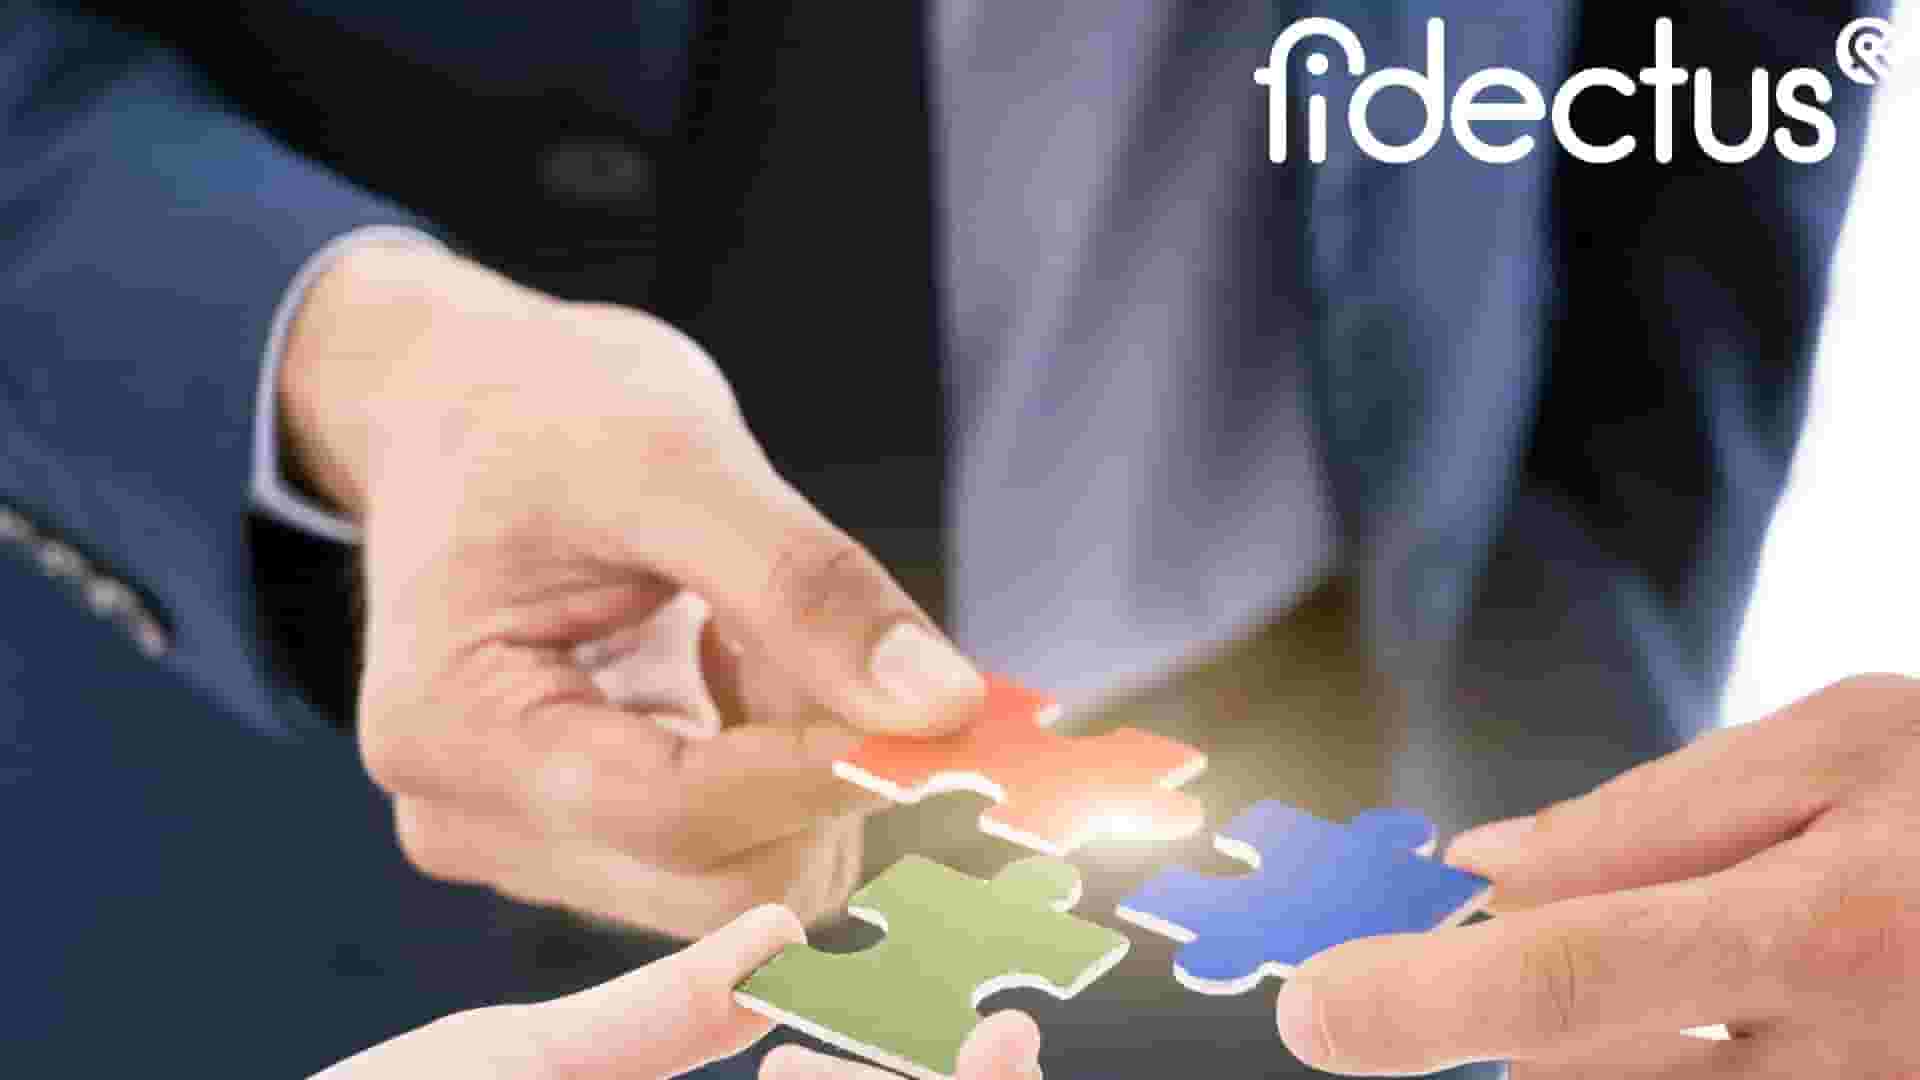 Fidectus launches new cloud service for automated eCM